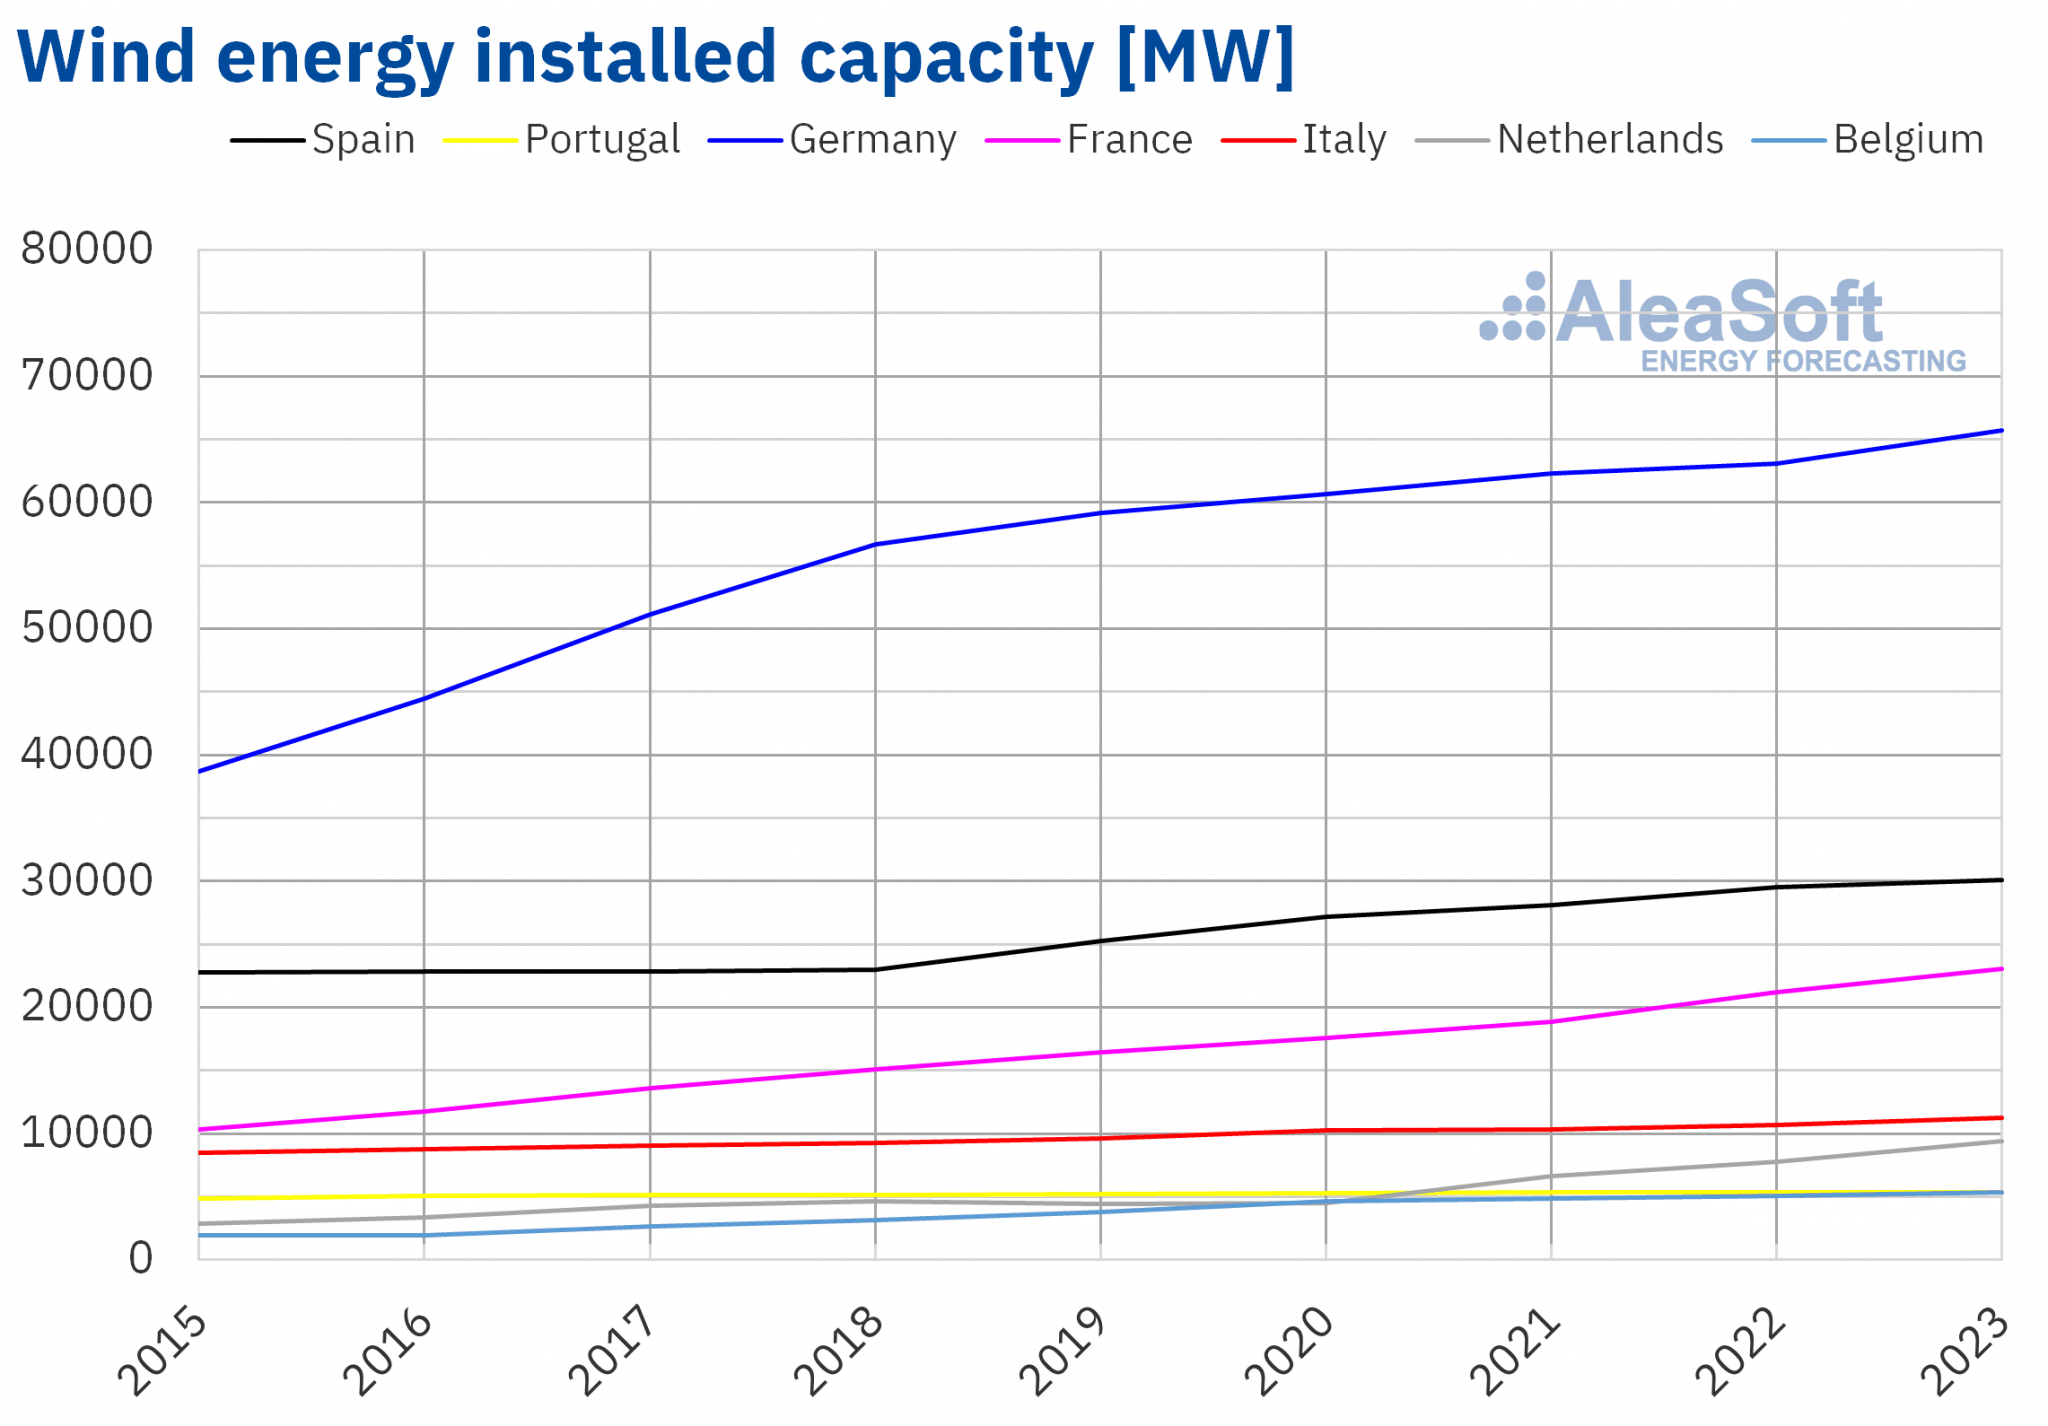 AleaSoft - wind energy installed capacity